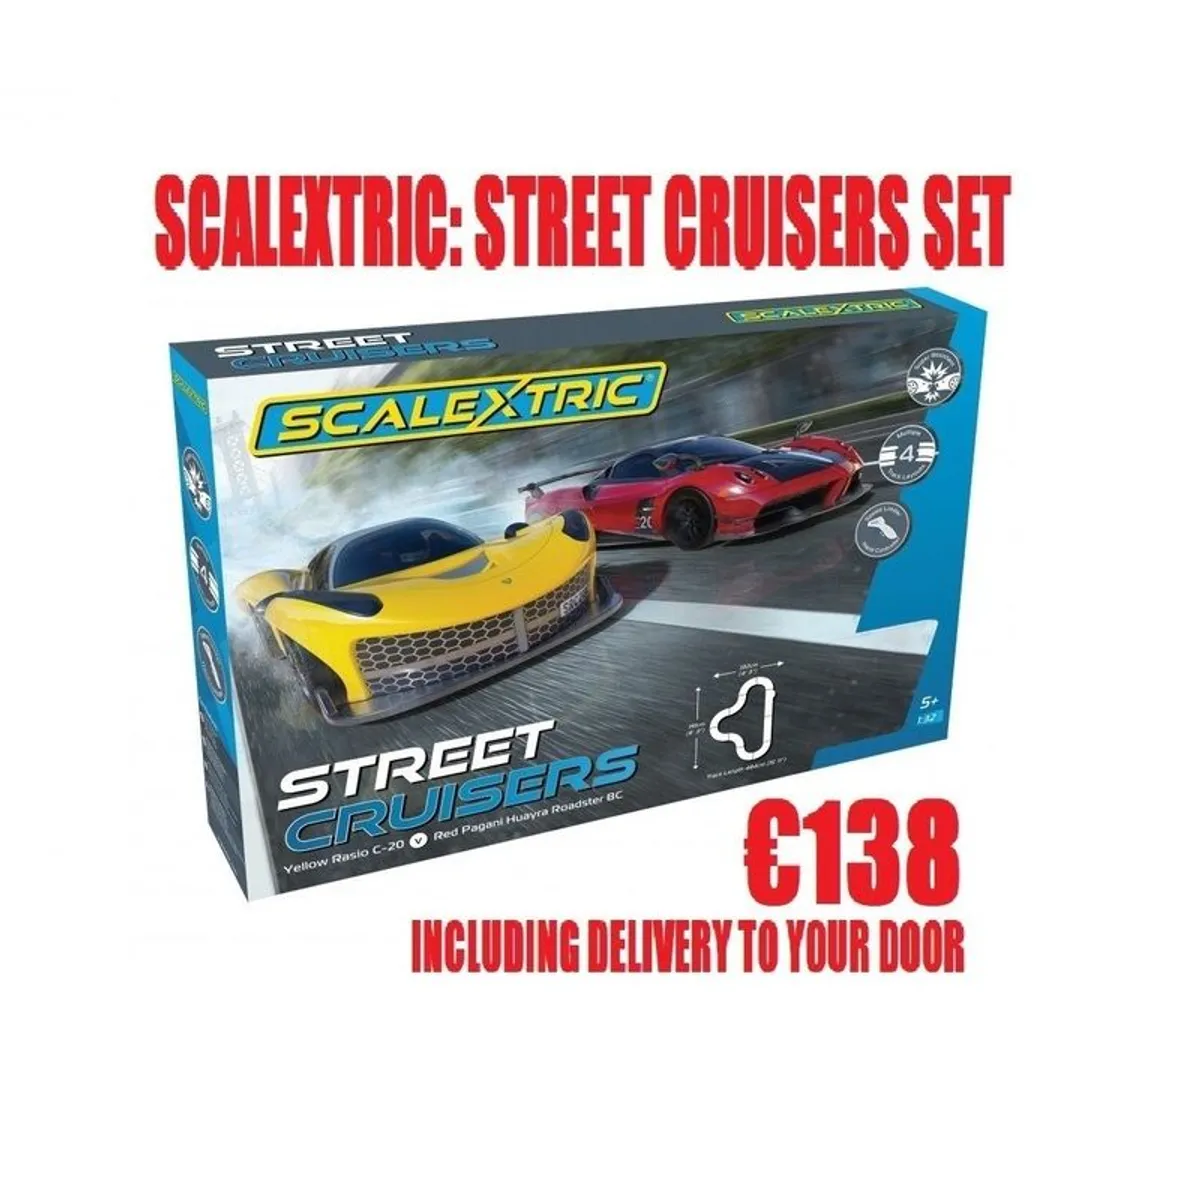 Scalextric New Street Cruisers Race Set.